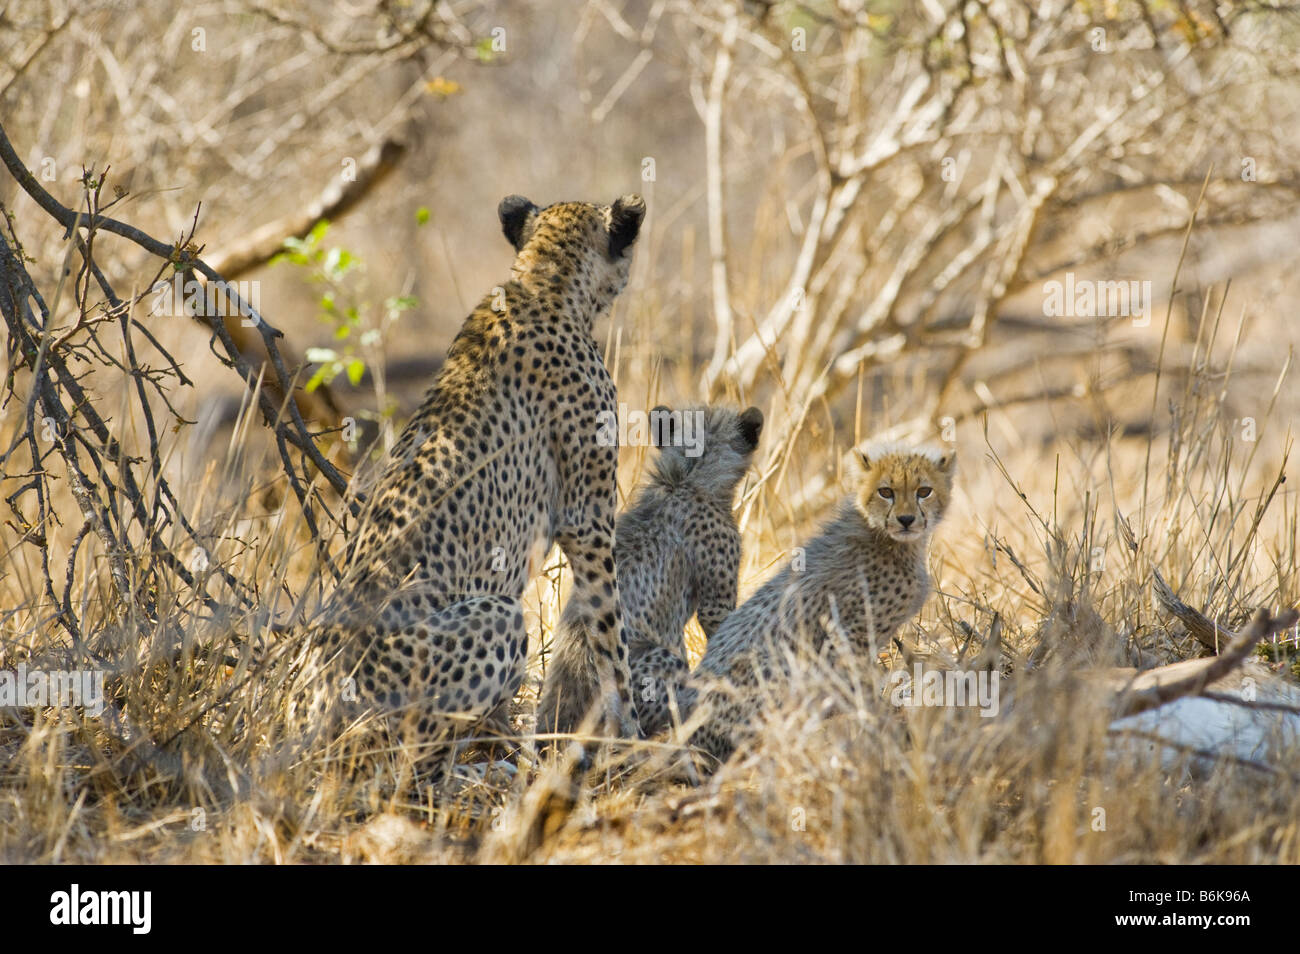 WILDLIFE wild cheetah gepard mother with cub Acinonyx jubatus caught an impala take prey southafrica south-afrika wilderness sou Stock Photo